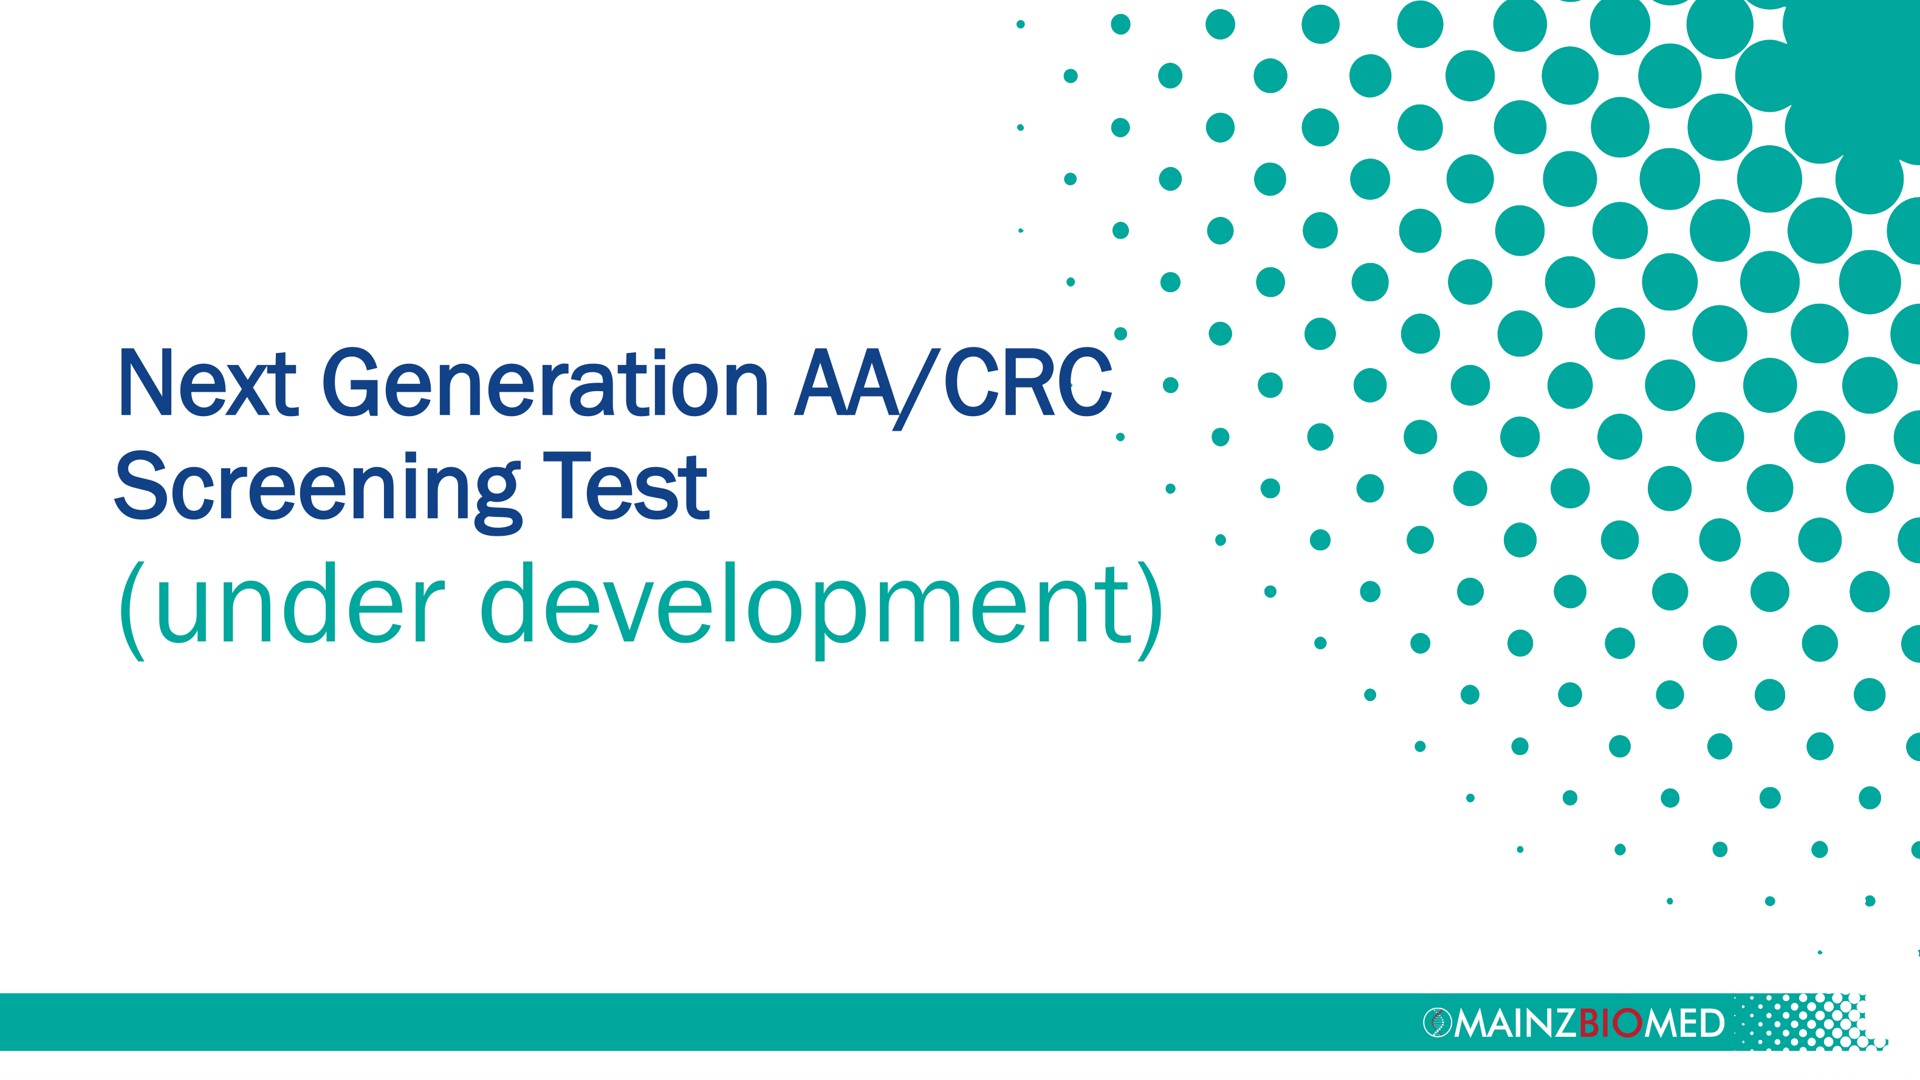 next generation screening test under development a on | Mainz Biomed NV